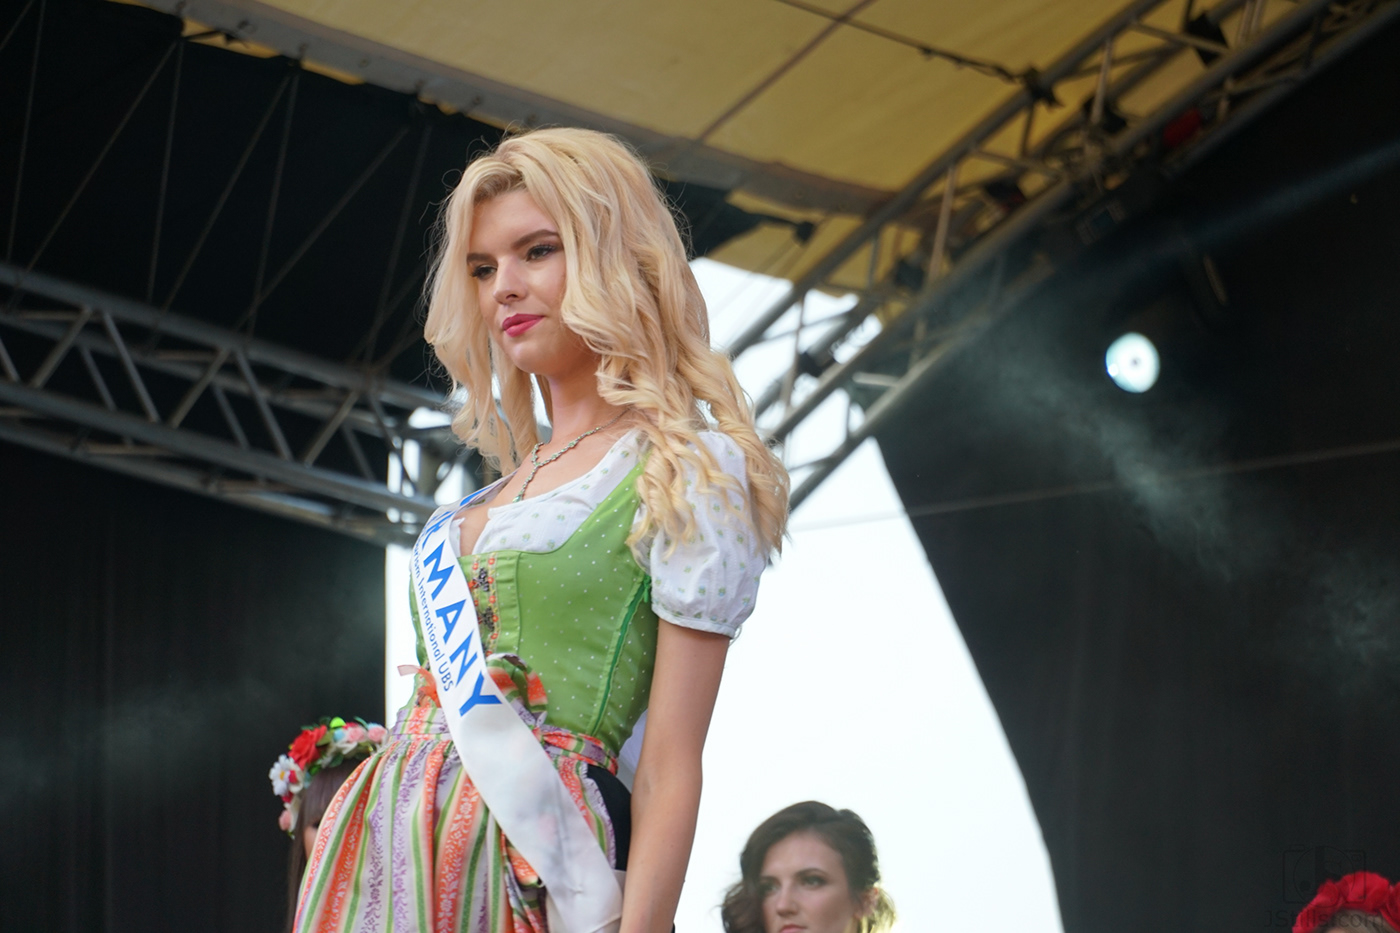 miss tourism miss tourism international Odessa ukraine Pagent